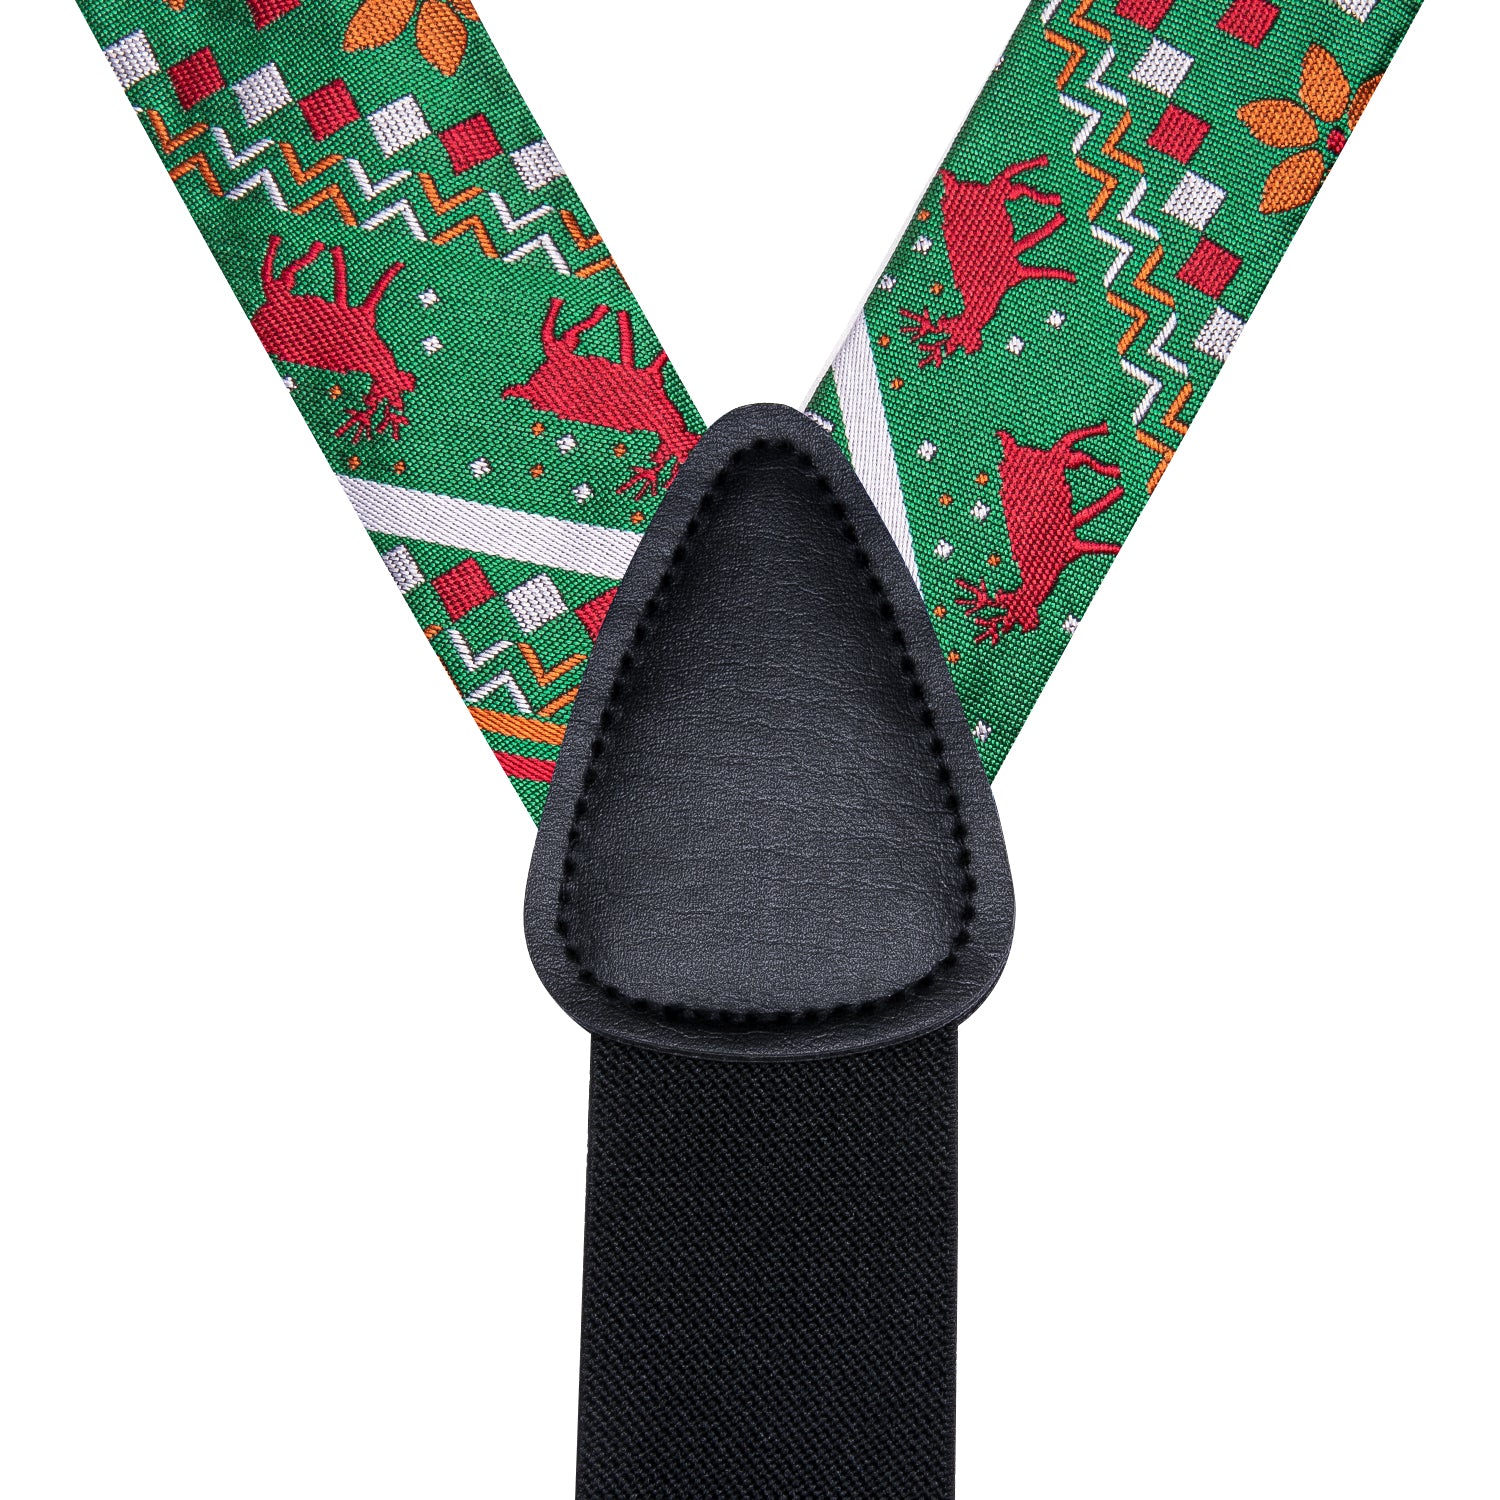 Christmas Green Novelty Suspender Bowtie Hanky Cufflinks Set